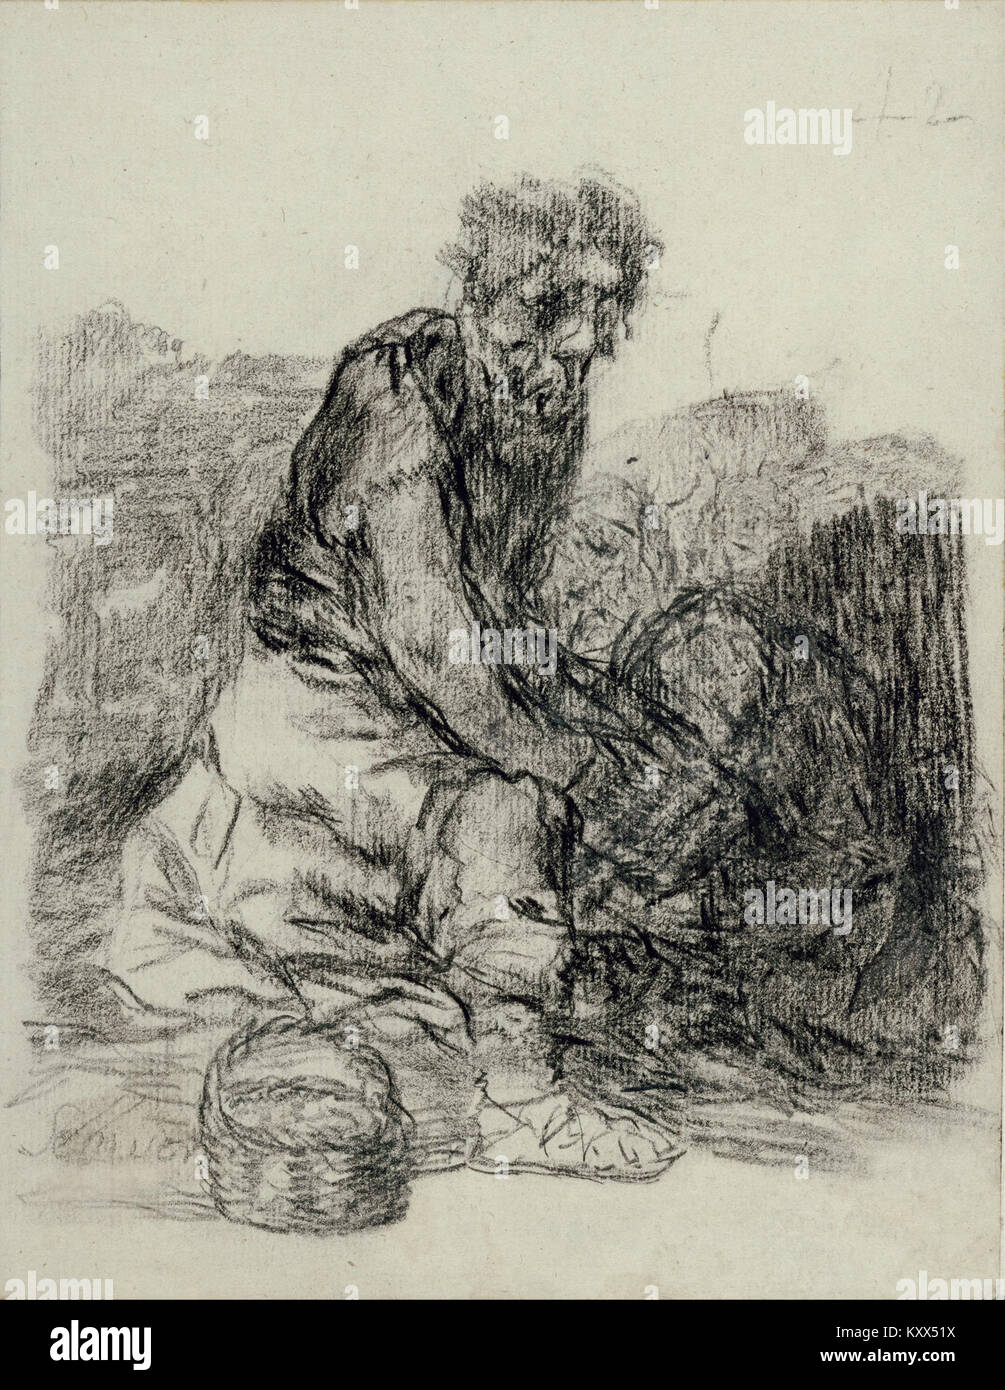 Francisco José de Goya y Lucientes (Francisco de Goya) (Spanish - Se muer(en) (They are dying) - Google Art Project Stock Photo